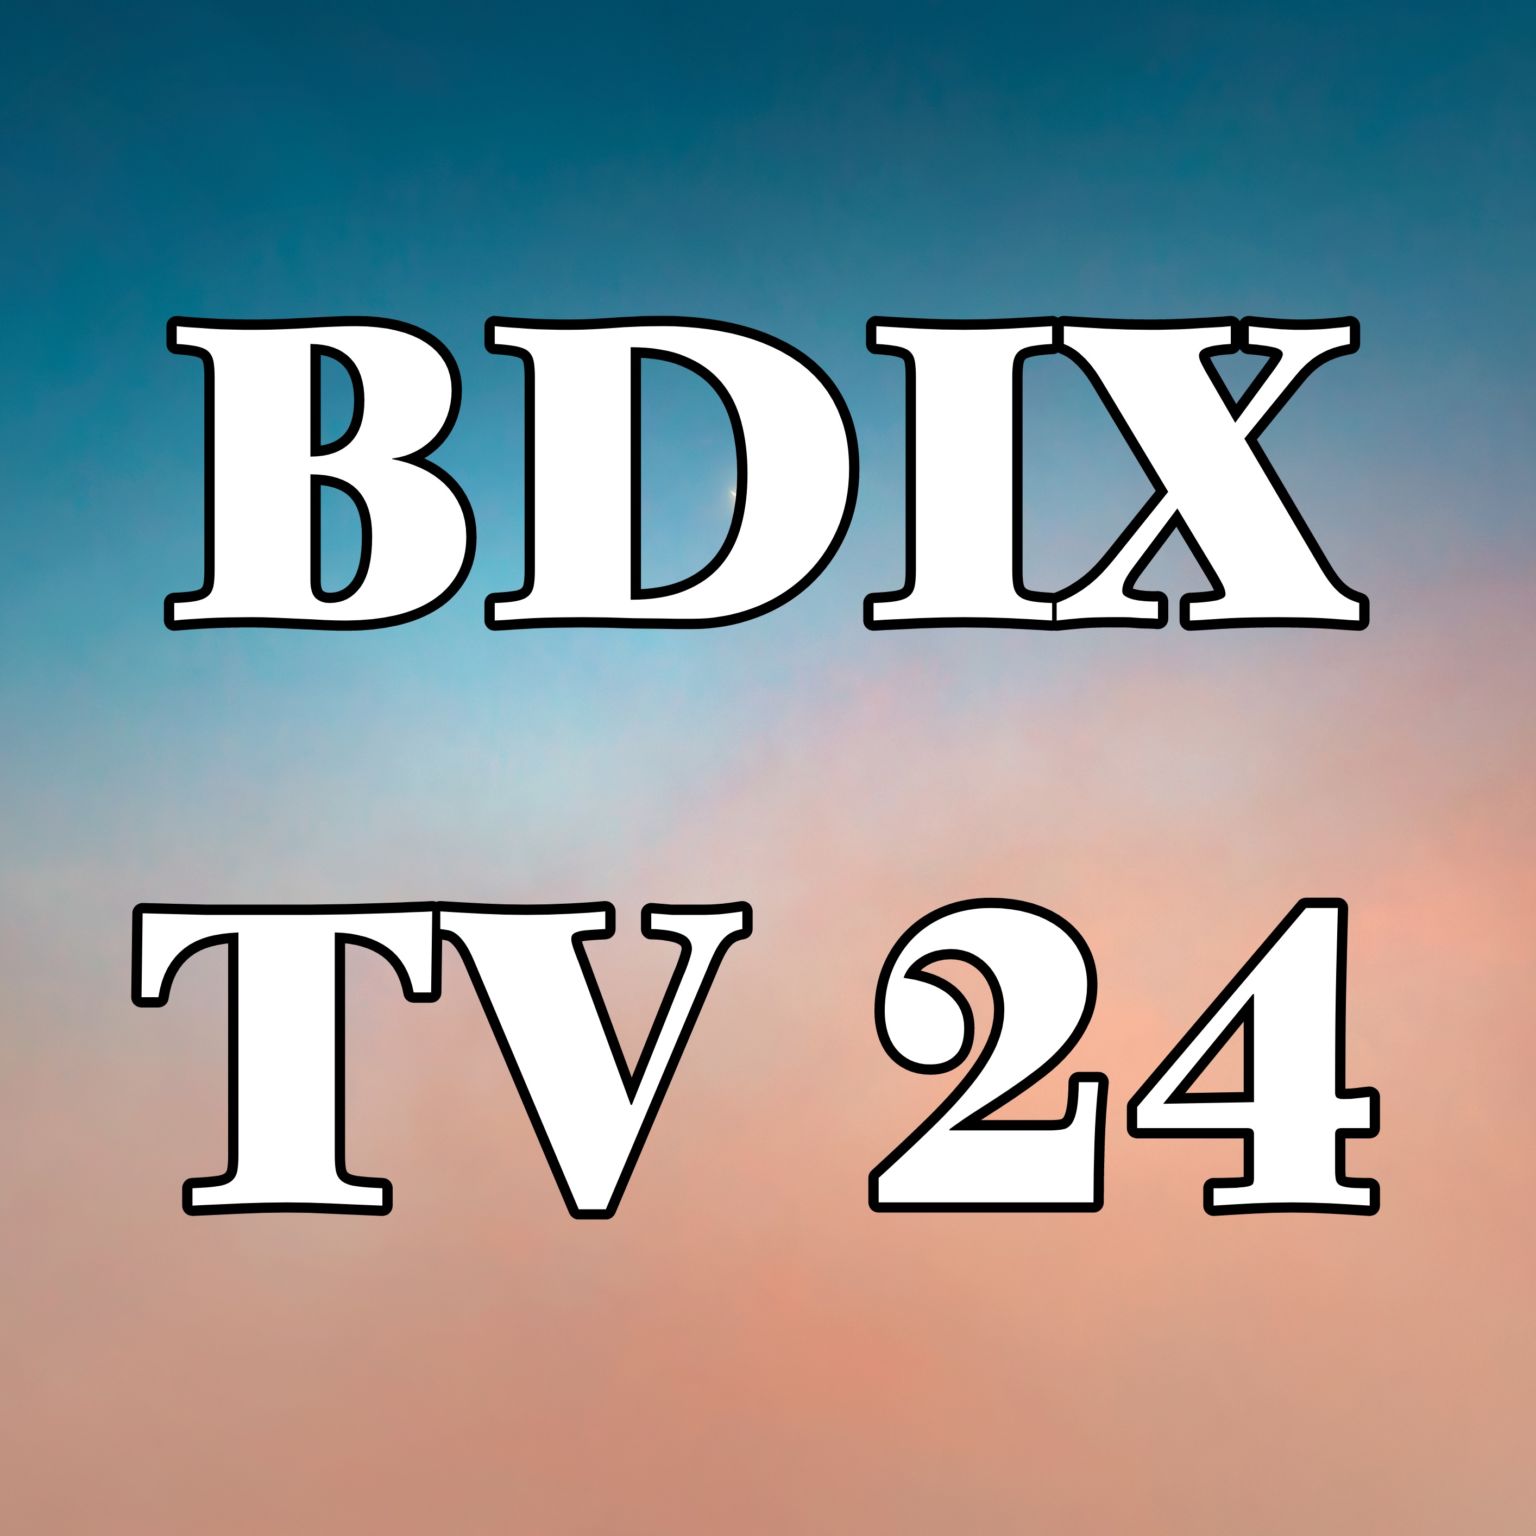 BDIX TV 24 দেখুন ১০০+ লাইভ টিভি মোবাইলে বা এন্ড্রয়েড টিভিতে একদম ফ্রি